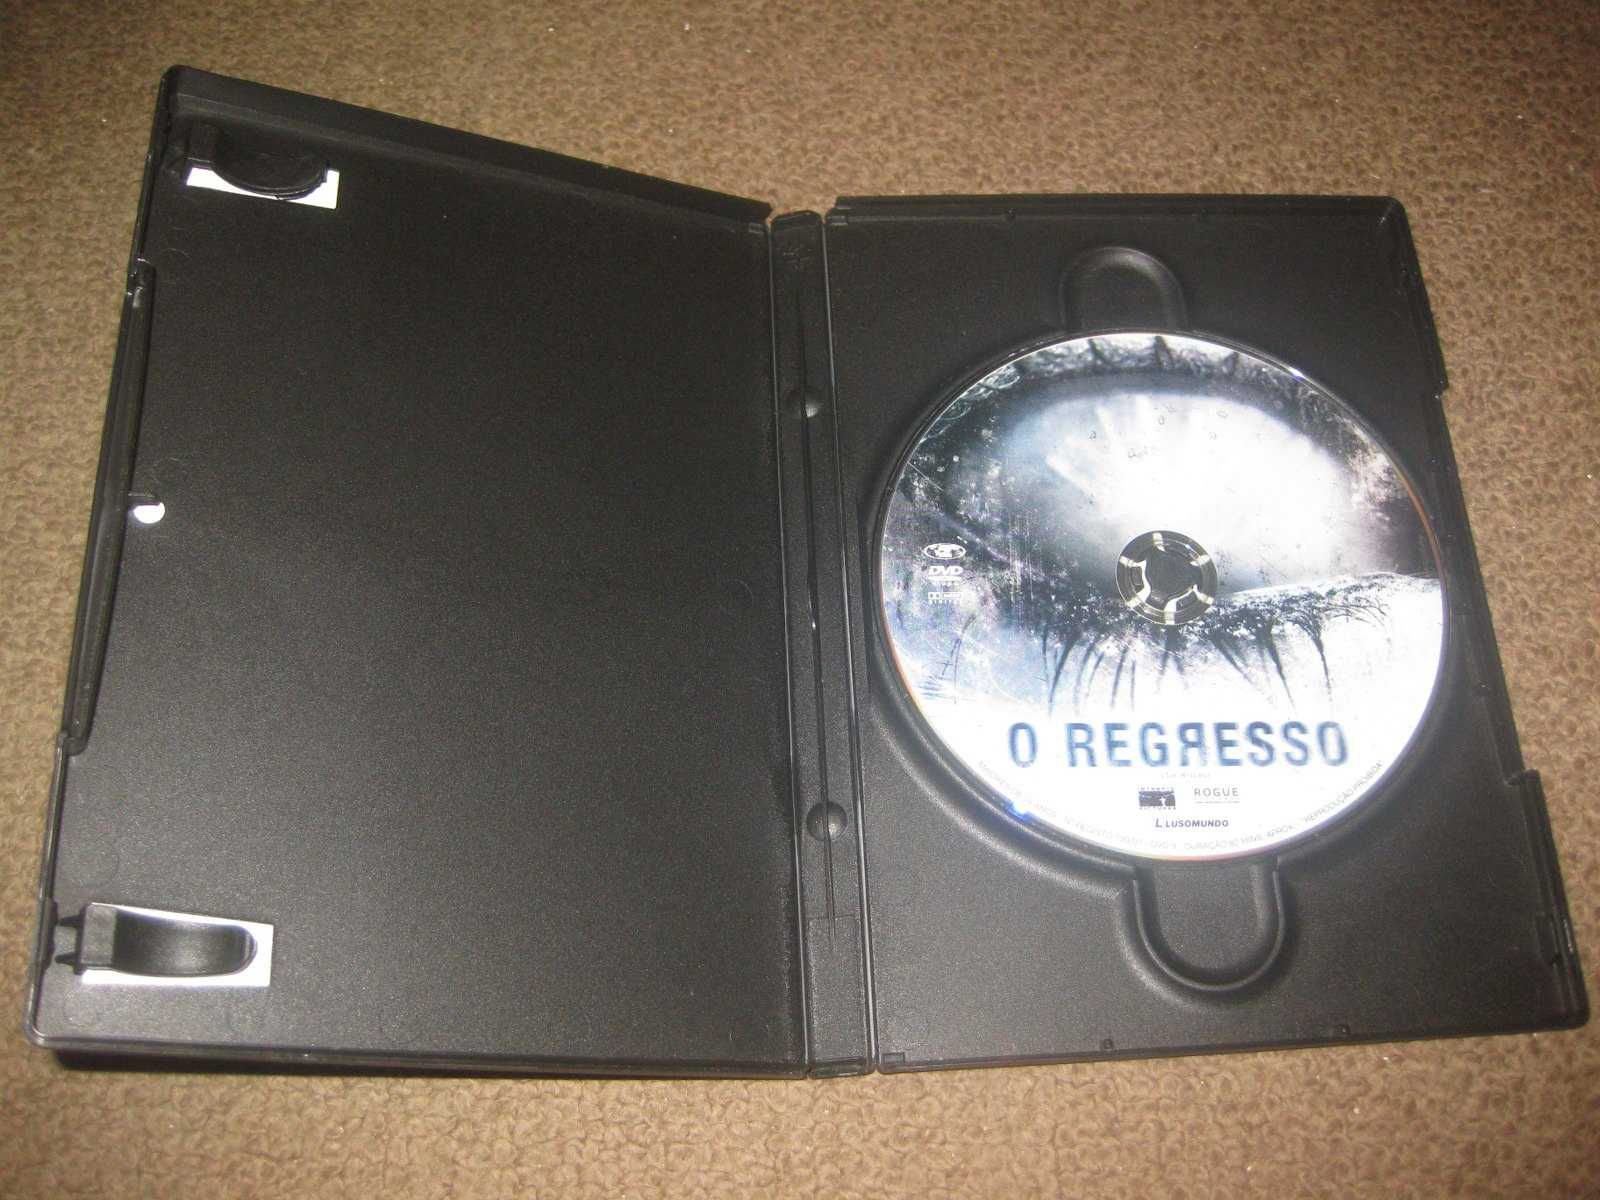 DVD "O Regresso" com Sarah Michelle Gellar